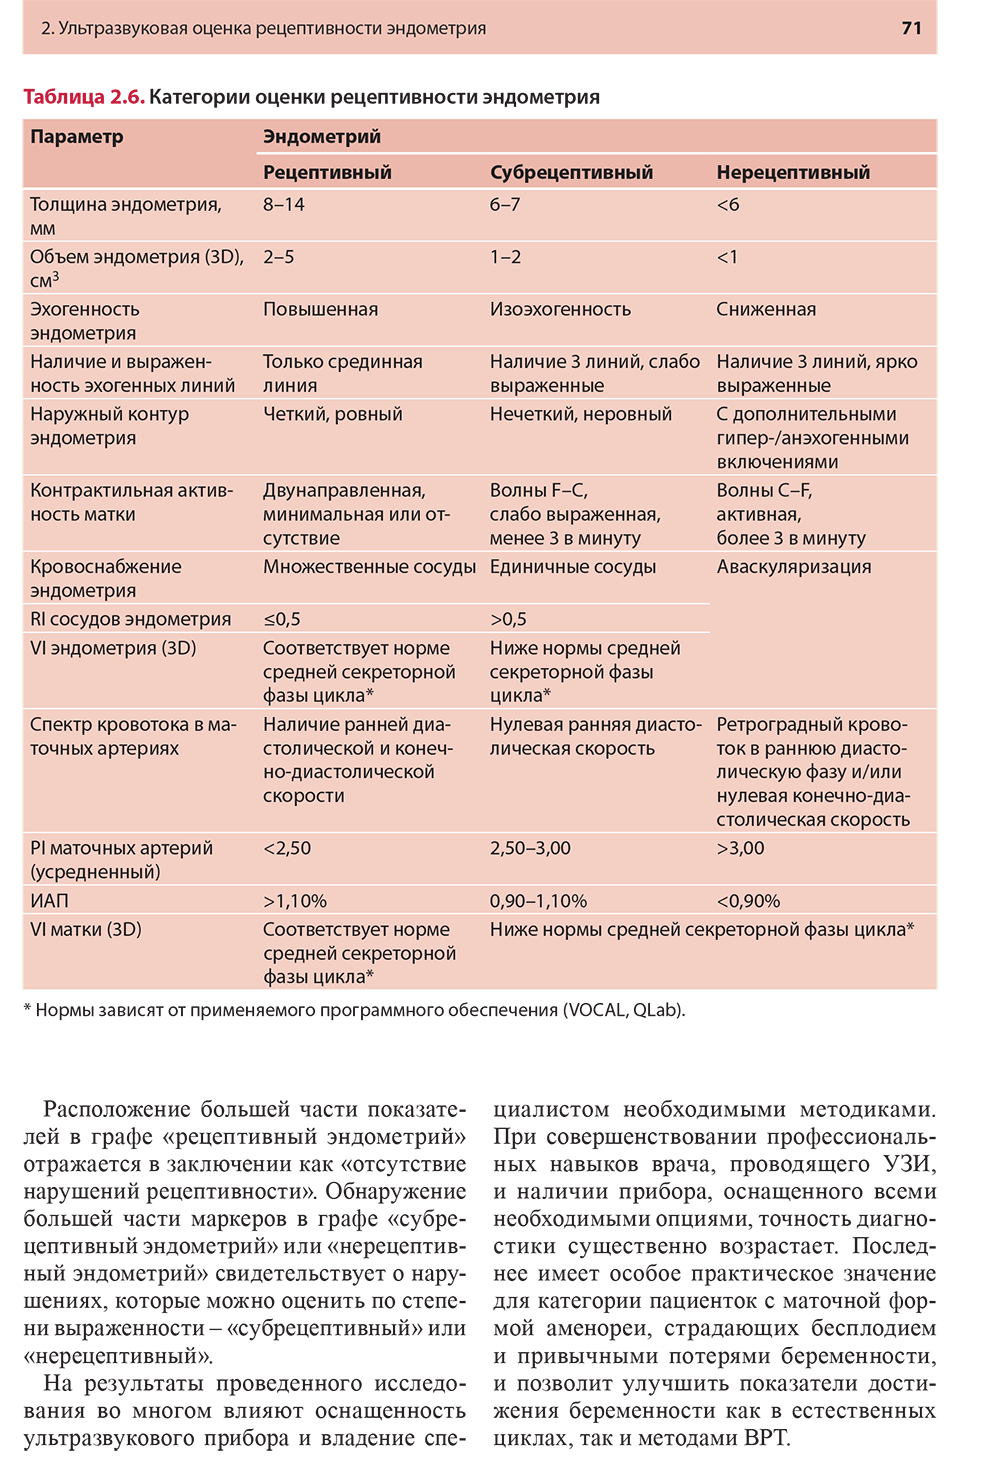 Таблица 2.6. Категории оценки рецептивности эндометрия